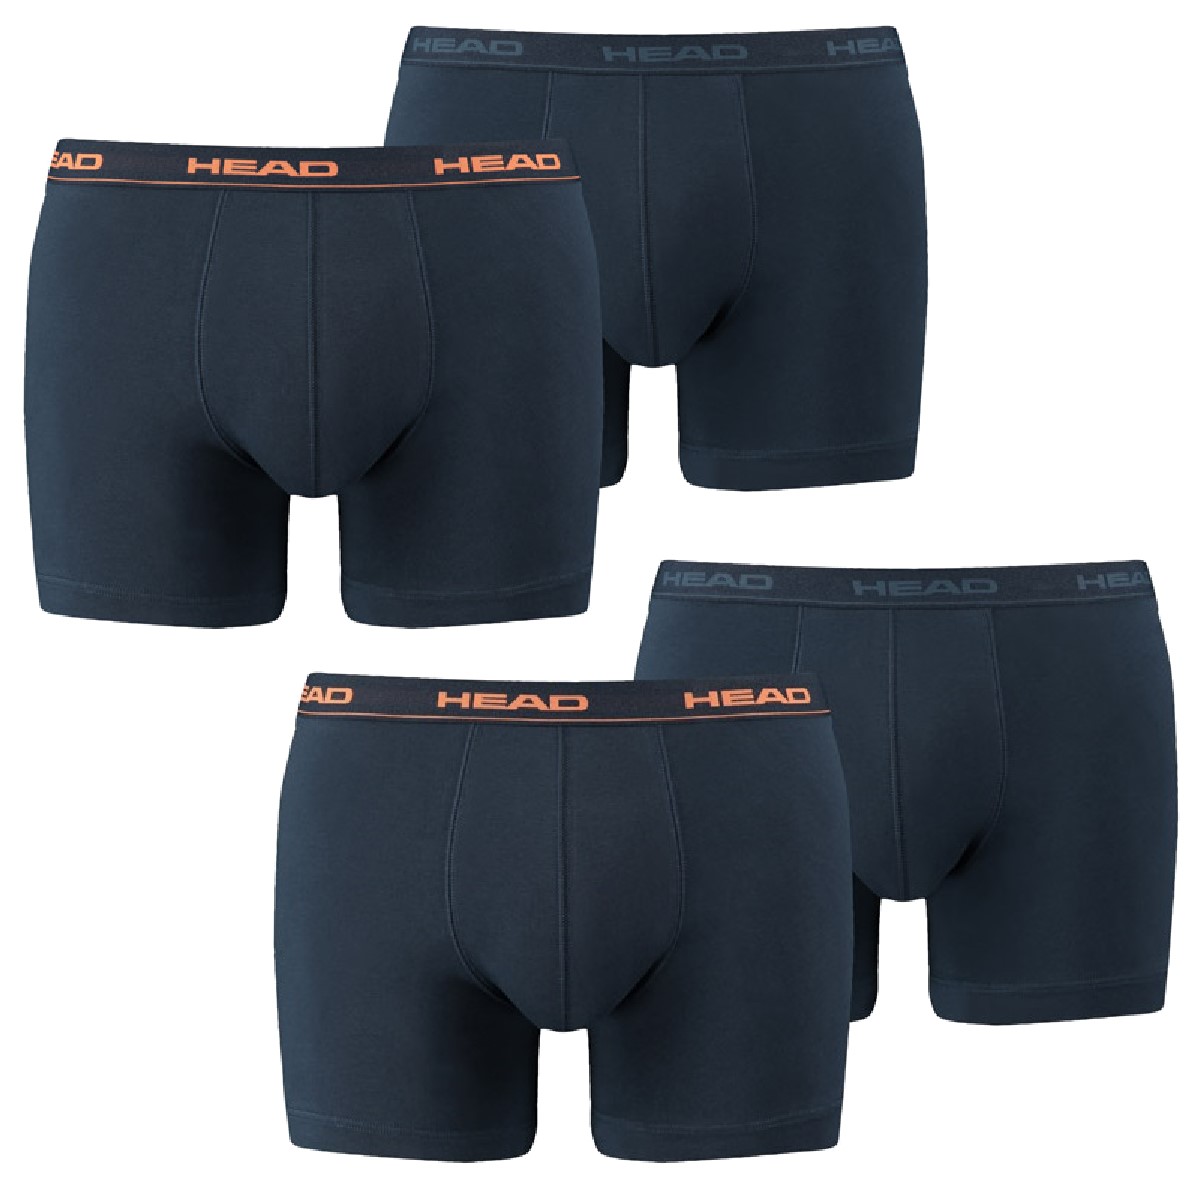 MULTIPACK BOXERS 4 PACK Head Herren Boxer Boxershorts Basic Pant Unterwäsche S, 493 - Peacoat/Orange